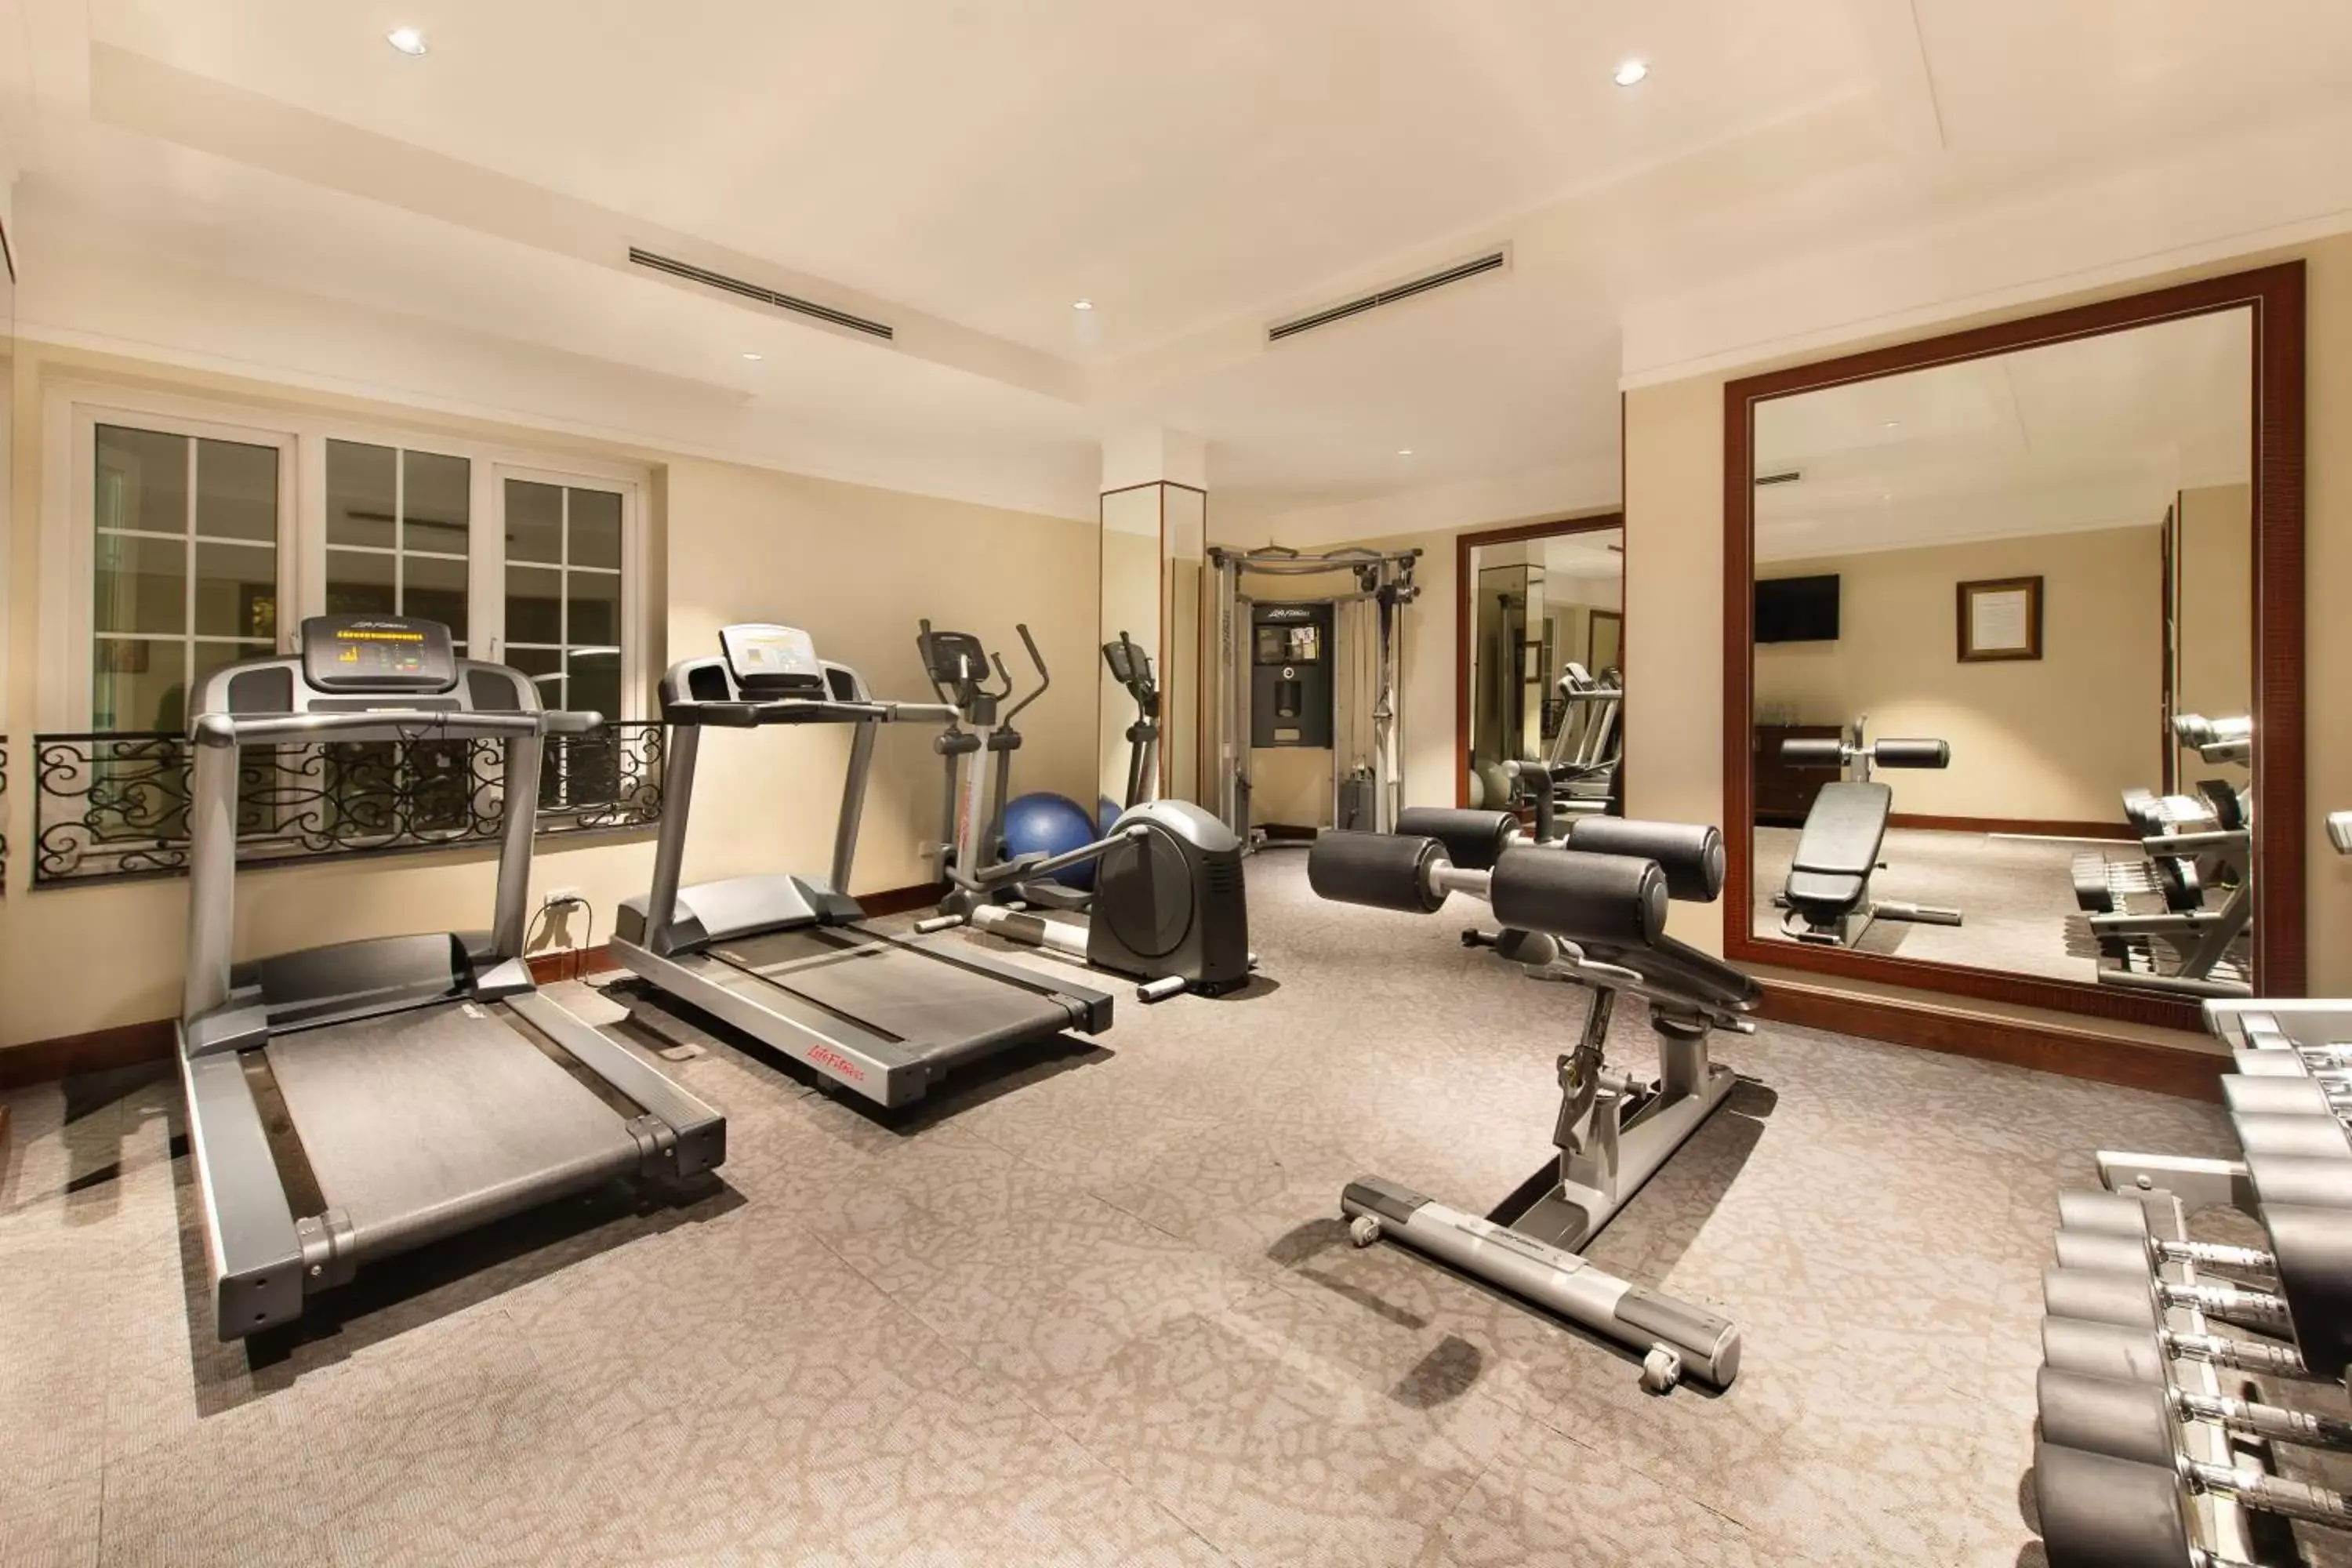 Fitness centre/facilities, Fitness Center/Facilities in Hanoi La Siesta Hotel & Spa